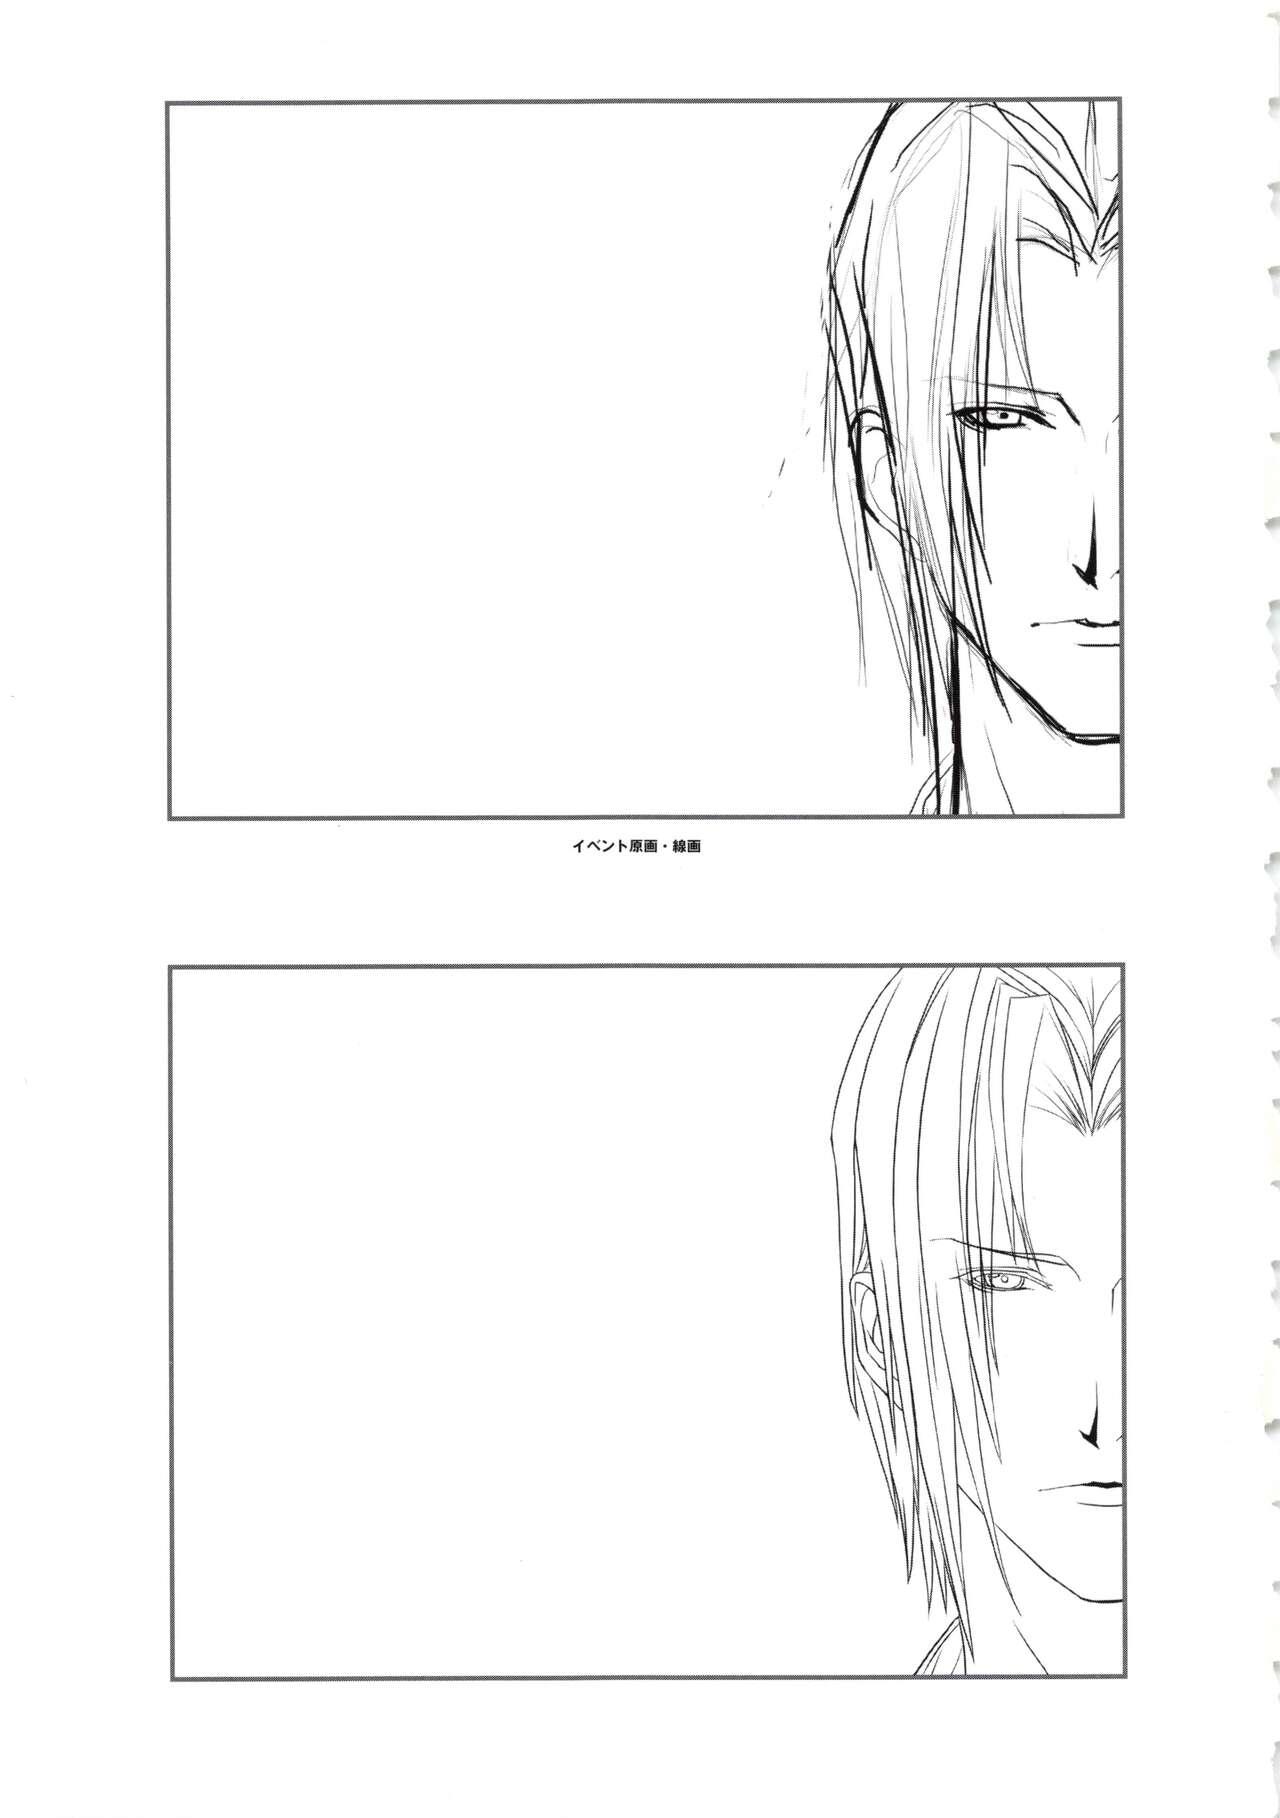 Hanachirasu - Initial Sketches and Unprocessed Illustrations - Selection 23